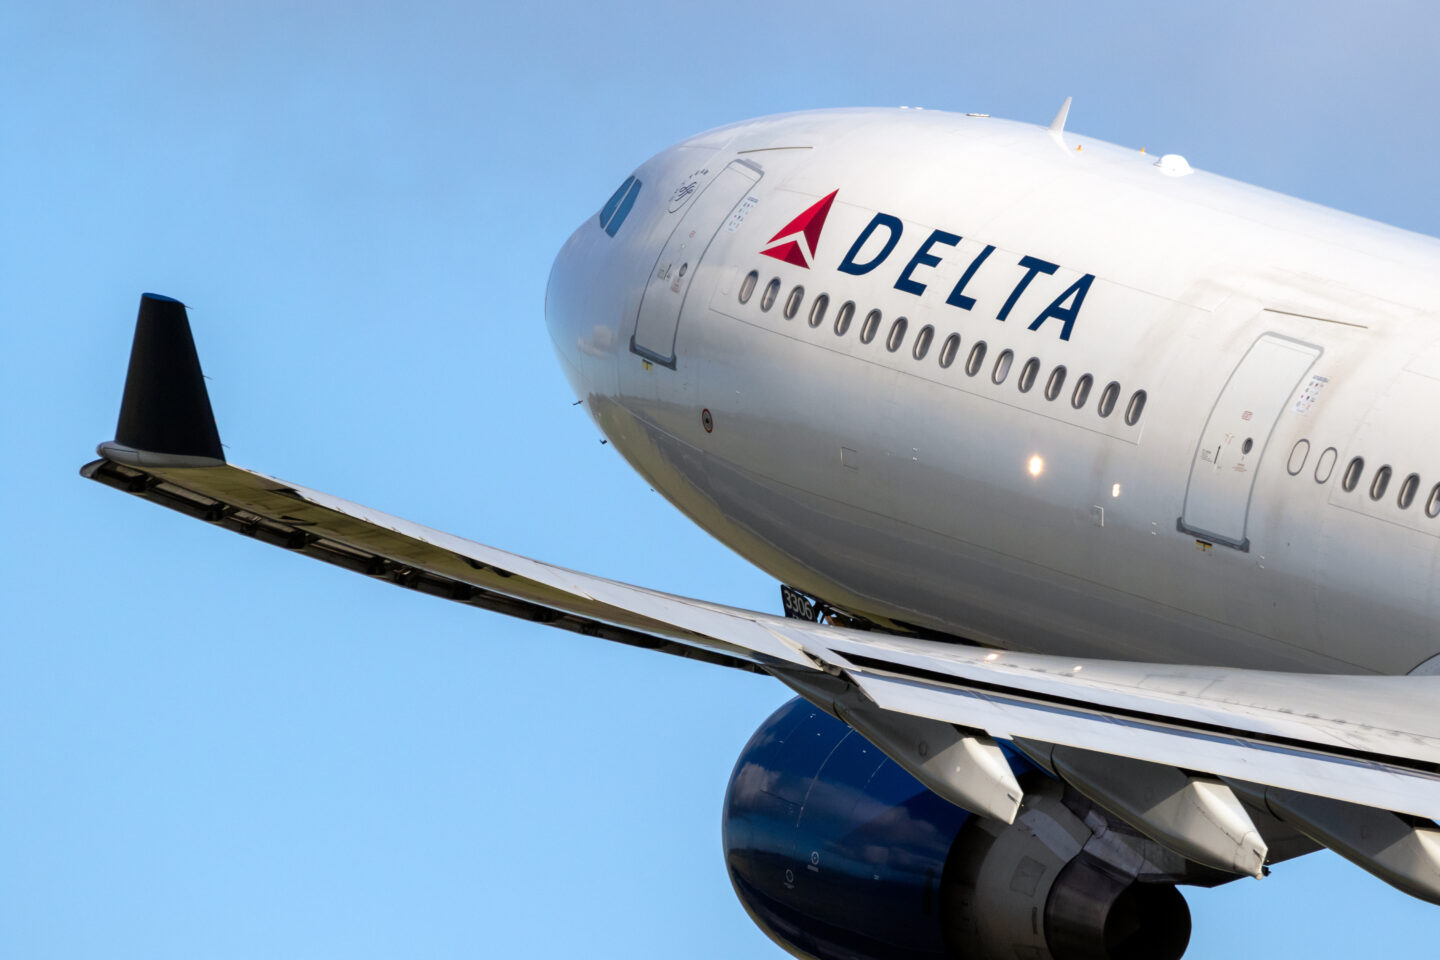 Delta One flights